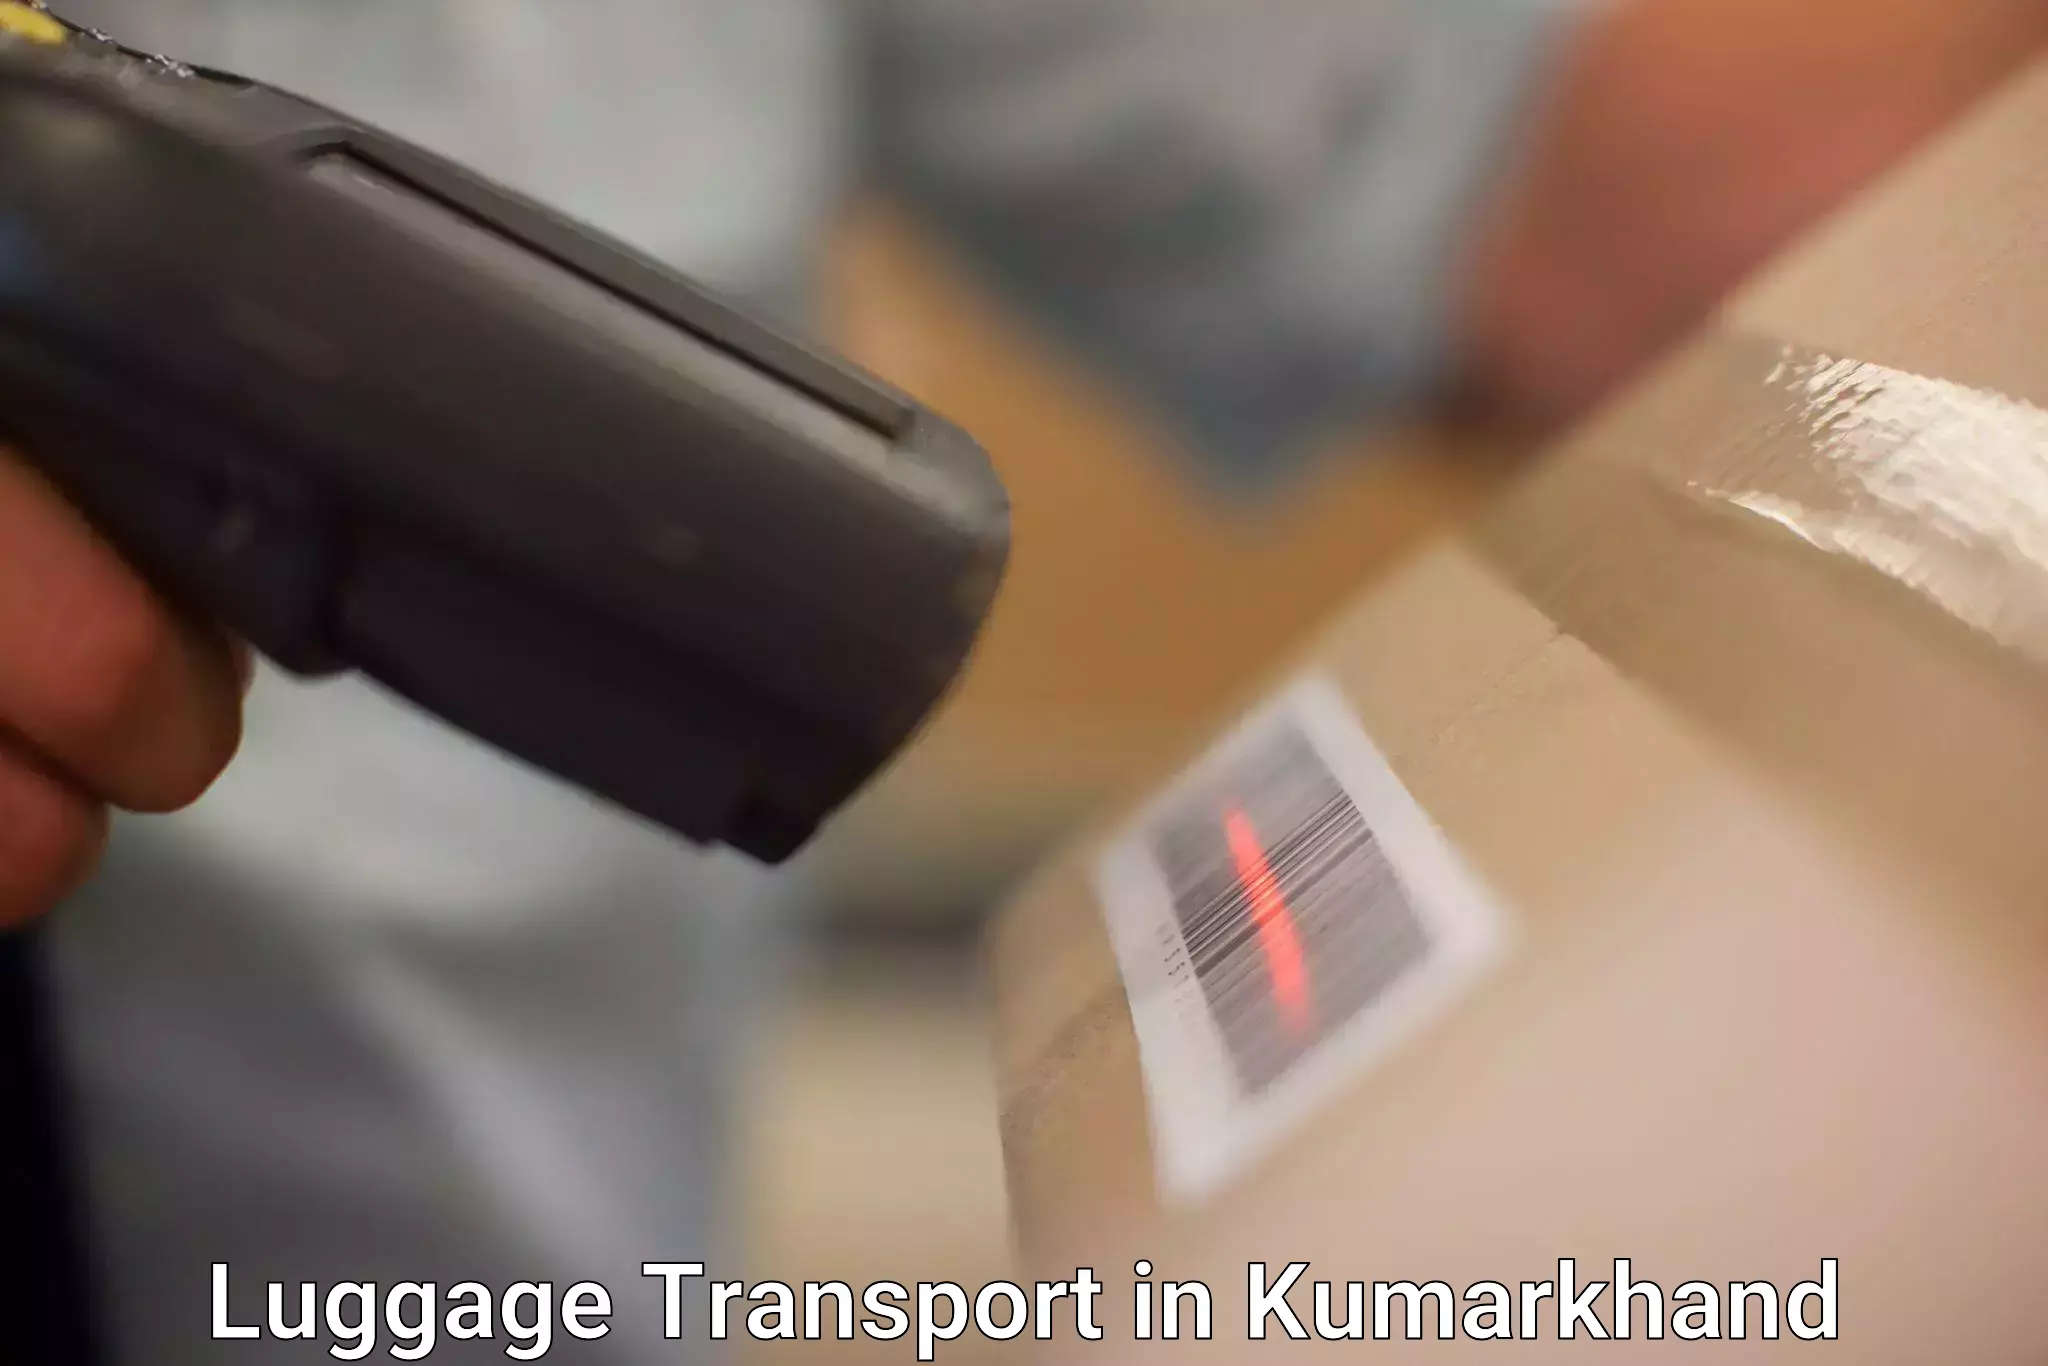 Luggage shipment processing in Kumarkhand